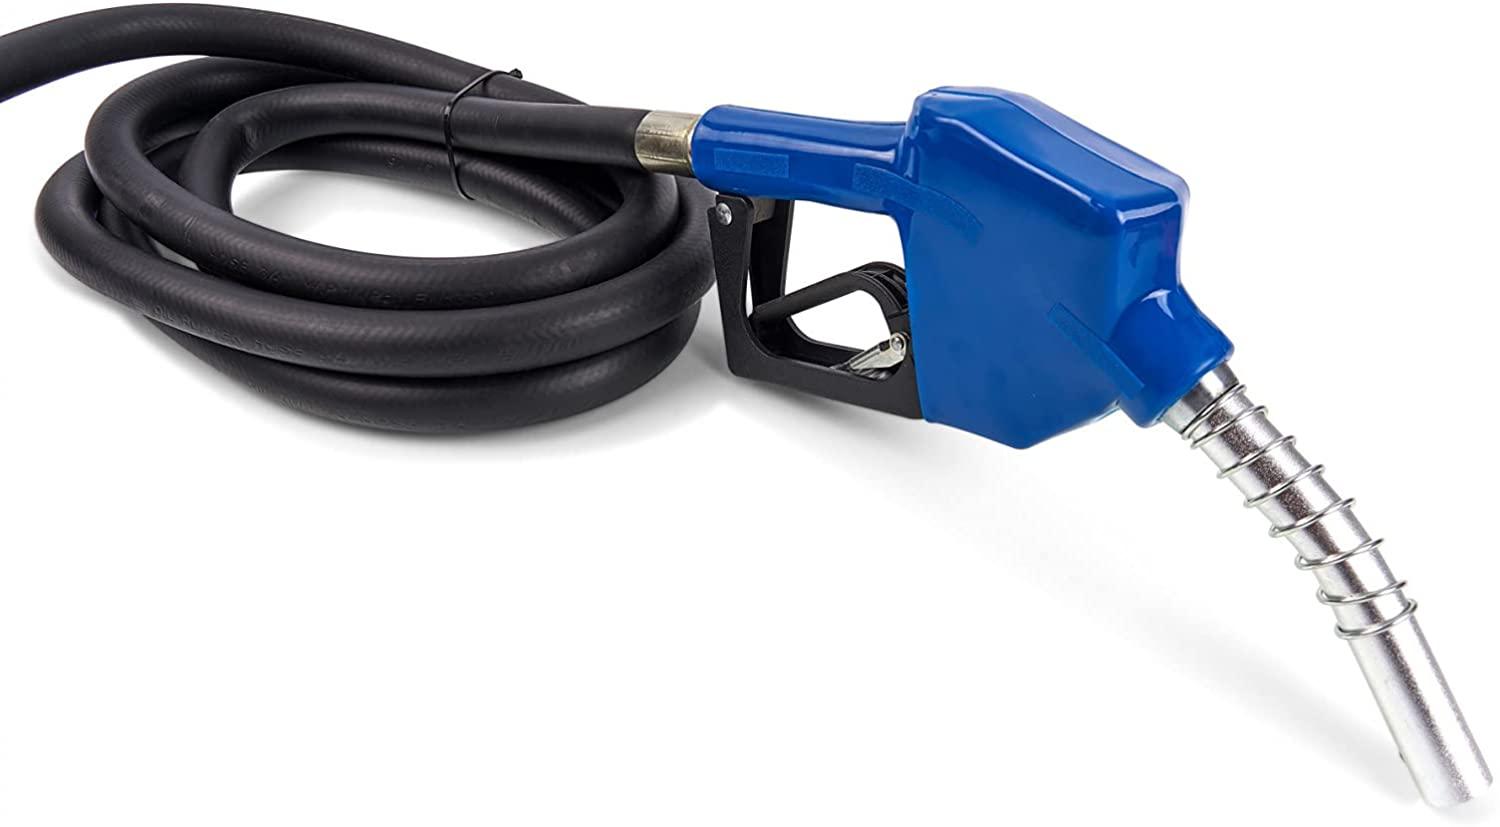 Dieselpumpe - E 220 - Adam Pumps - Öl / elektrisch / selbstansaugend